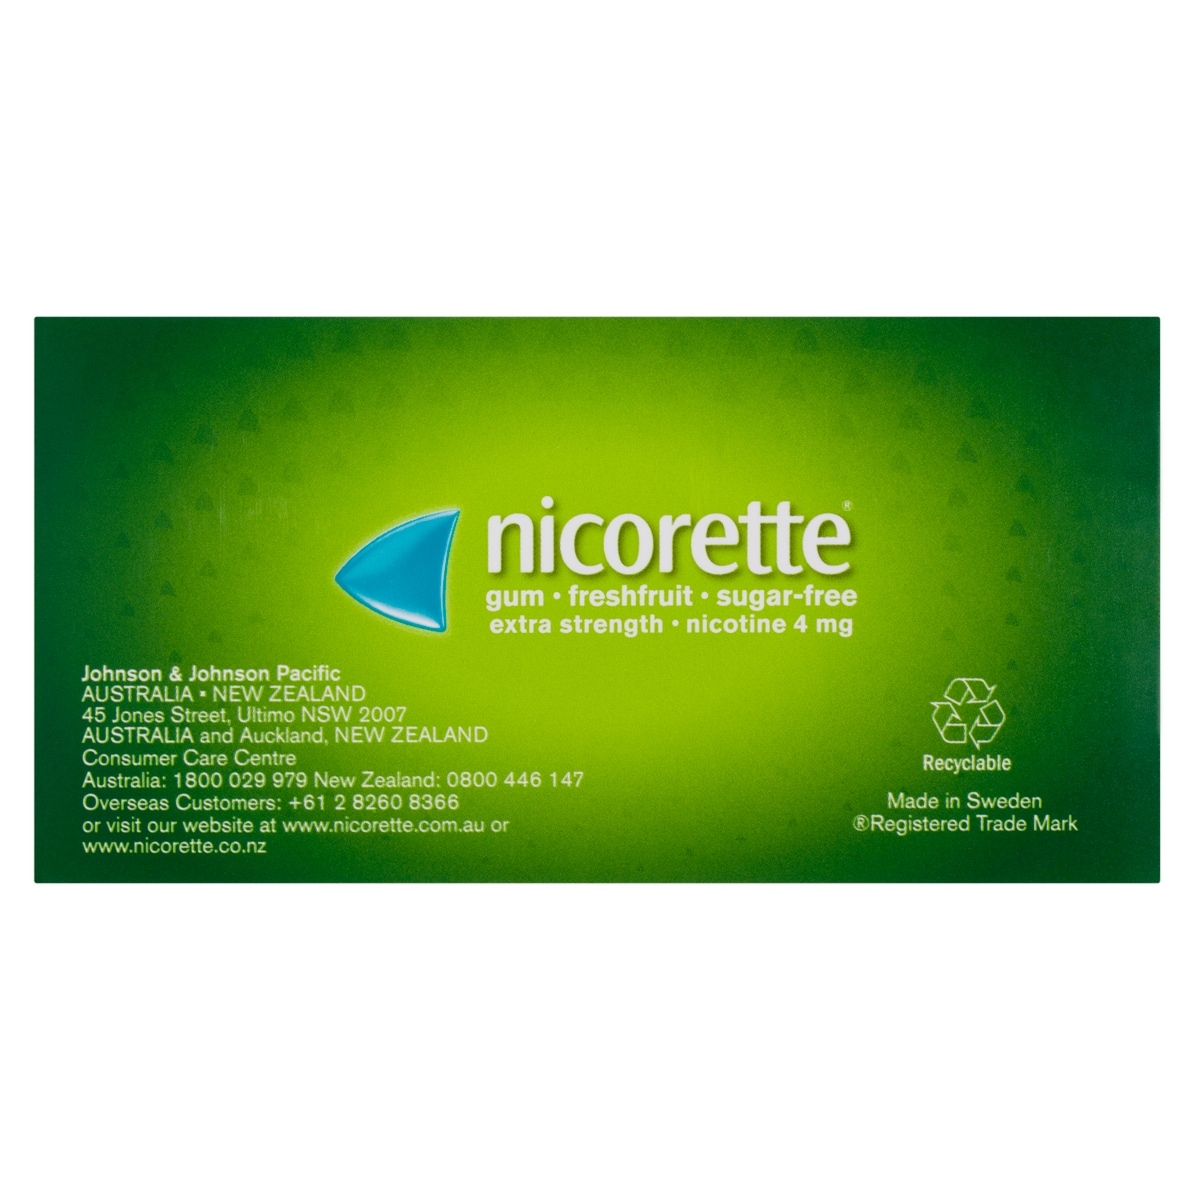 Nicorette Quit Smoking Nicotine Gum 4mg Fresh Fruit 75 Pack